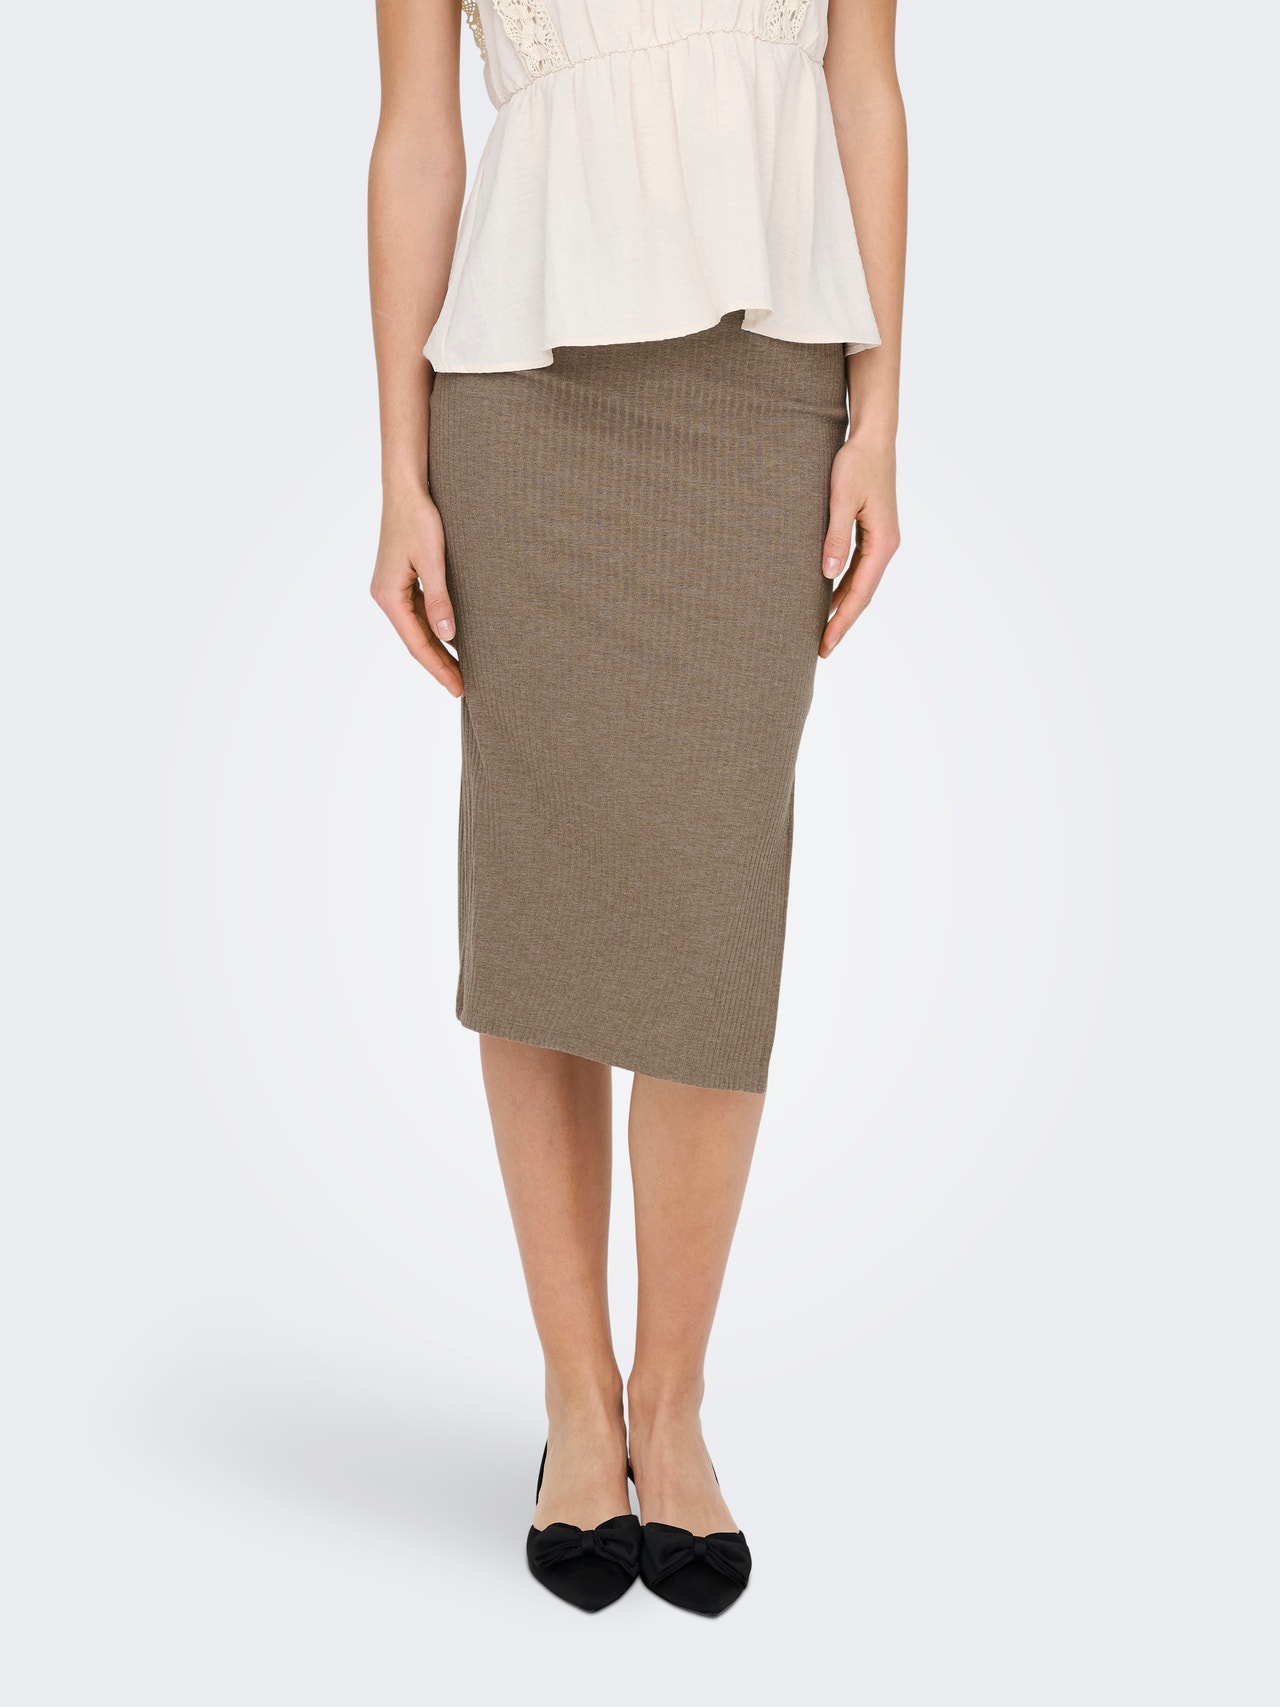 ONLY Short skirt -Caribou - 15233600